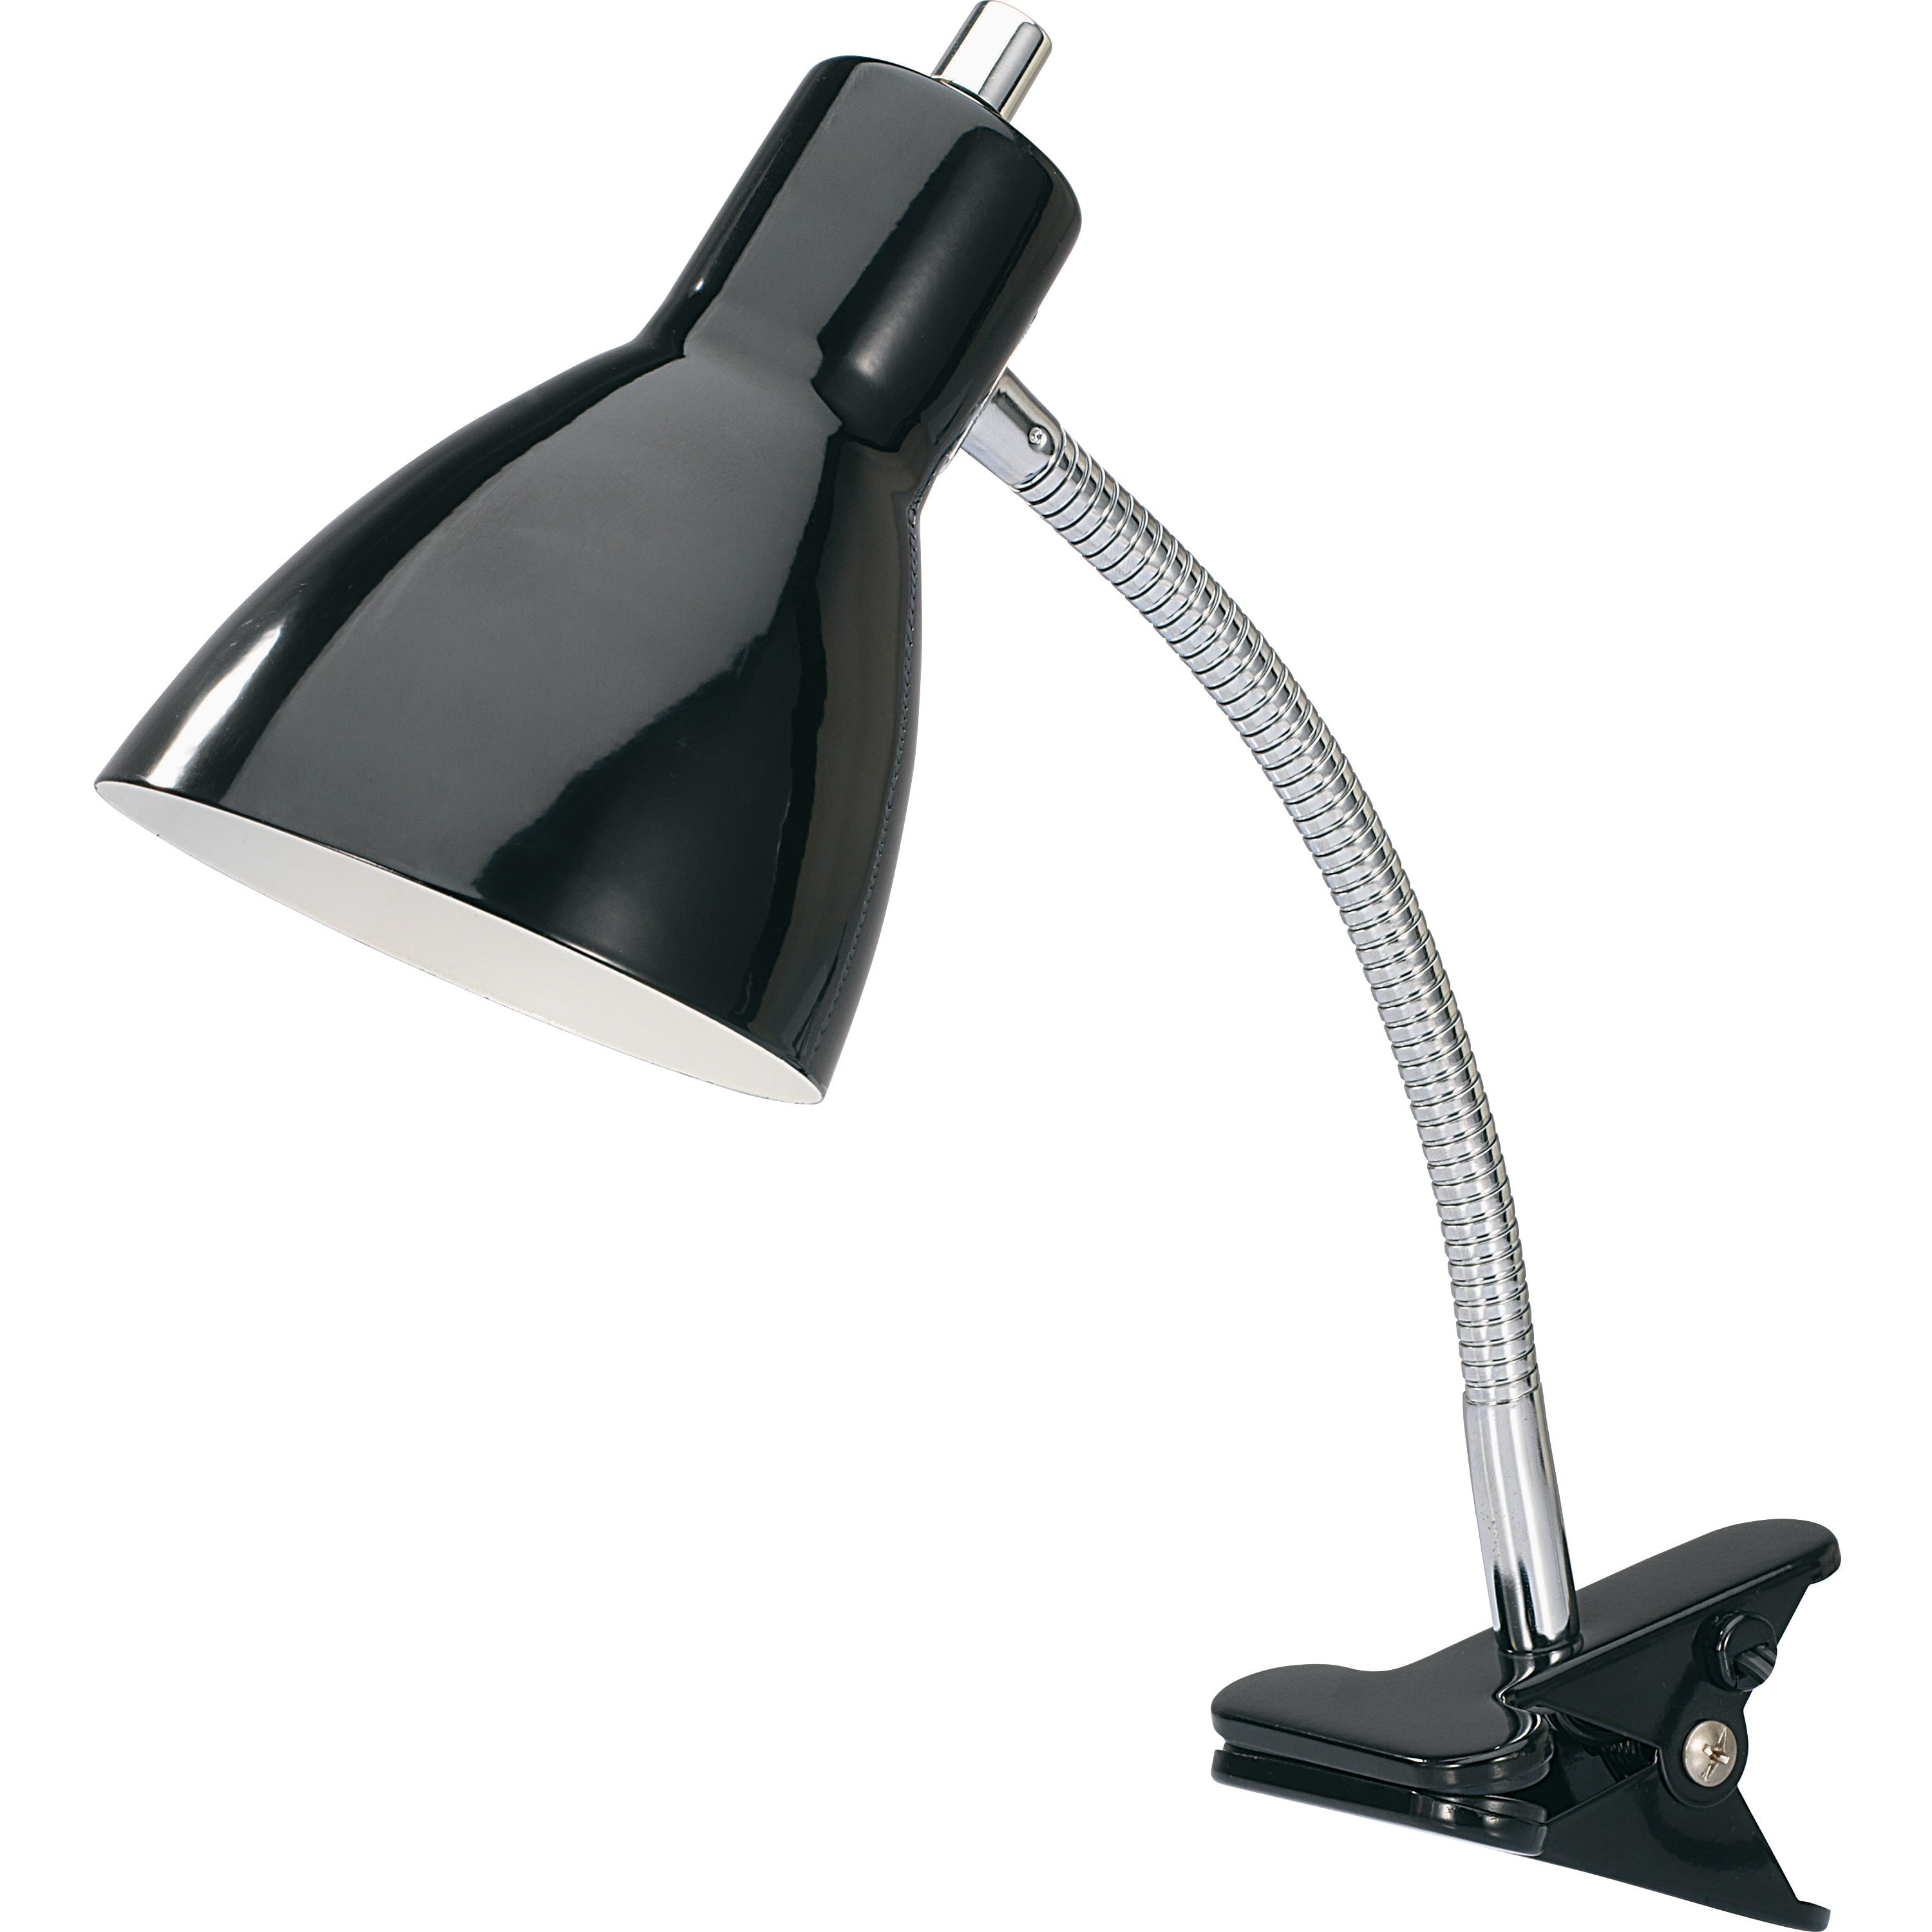 Black Lorell 99954 Architect Desk Lamp